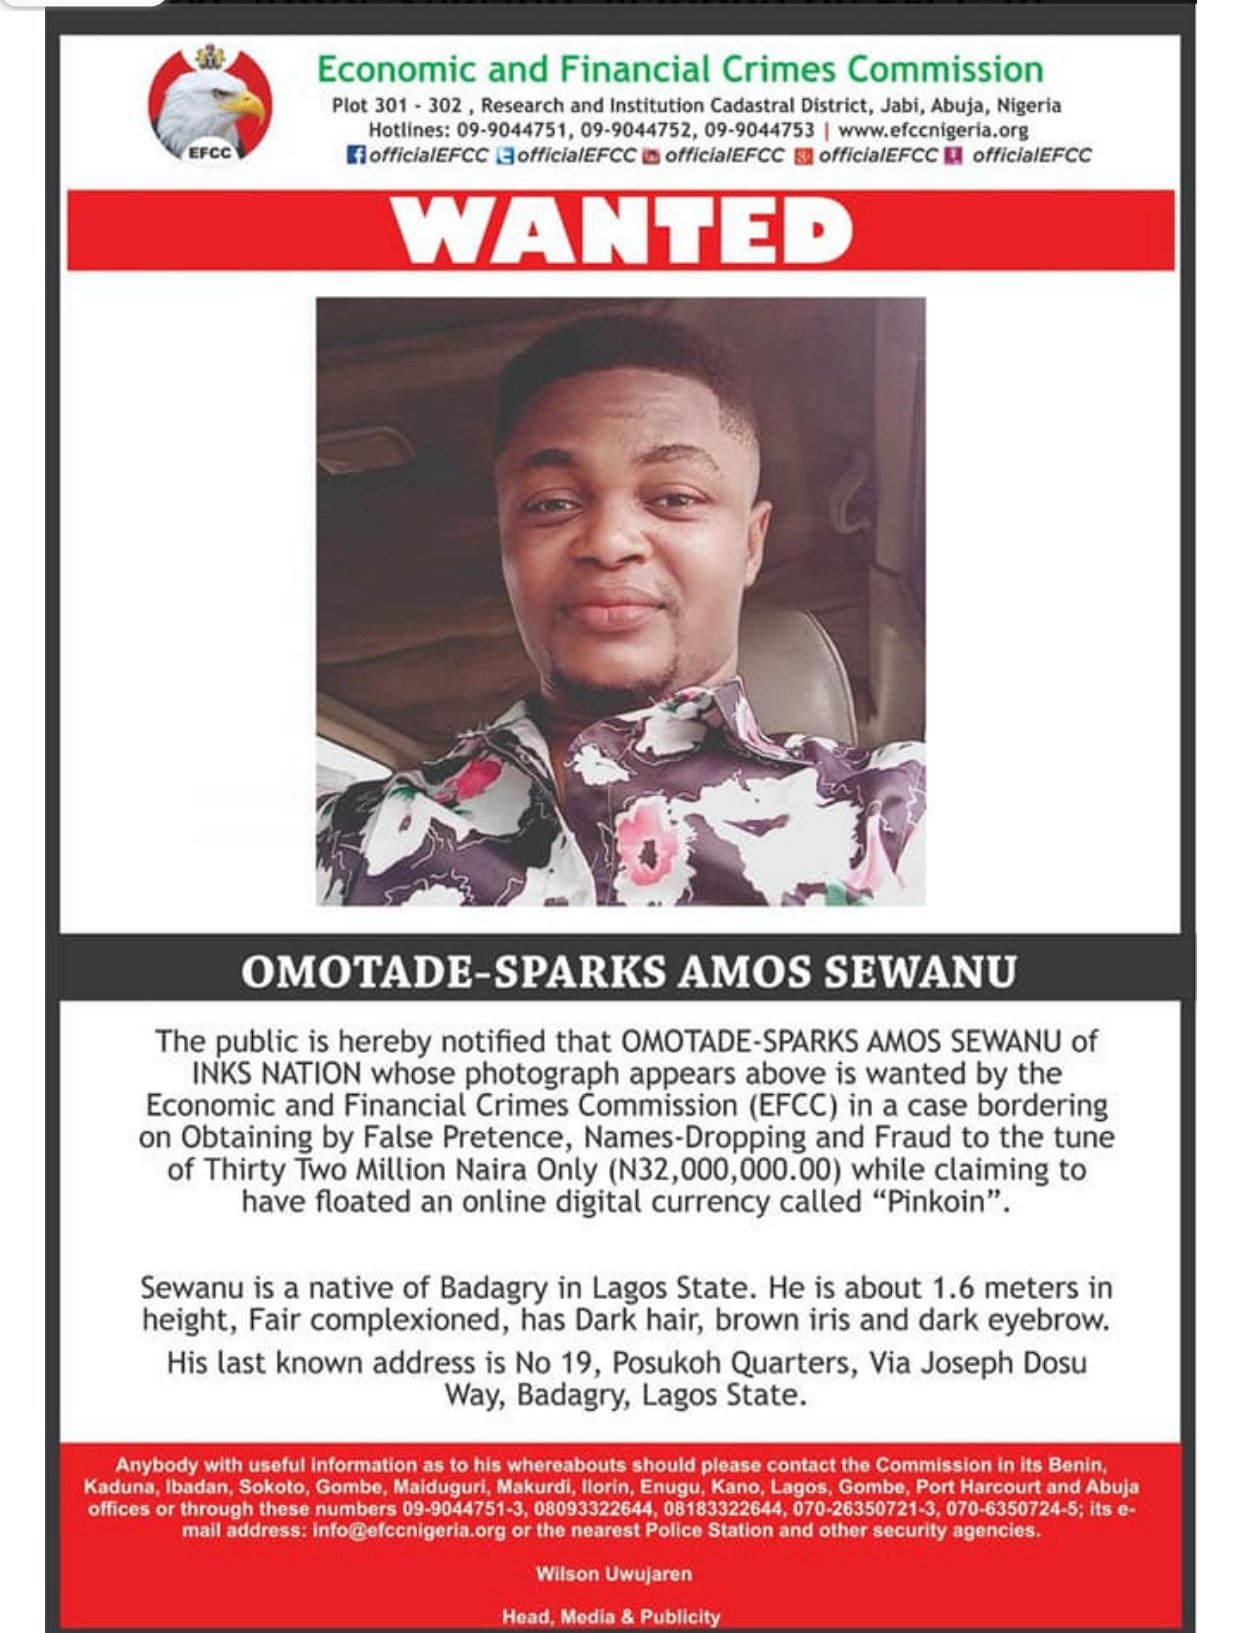 Omotade-Sparks Amos Sewanu